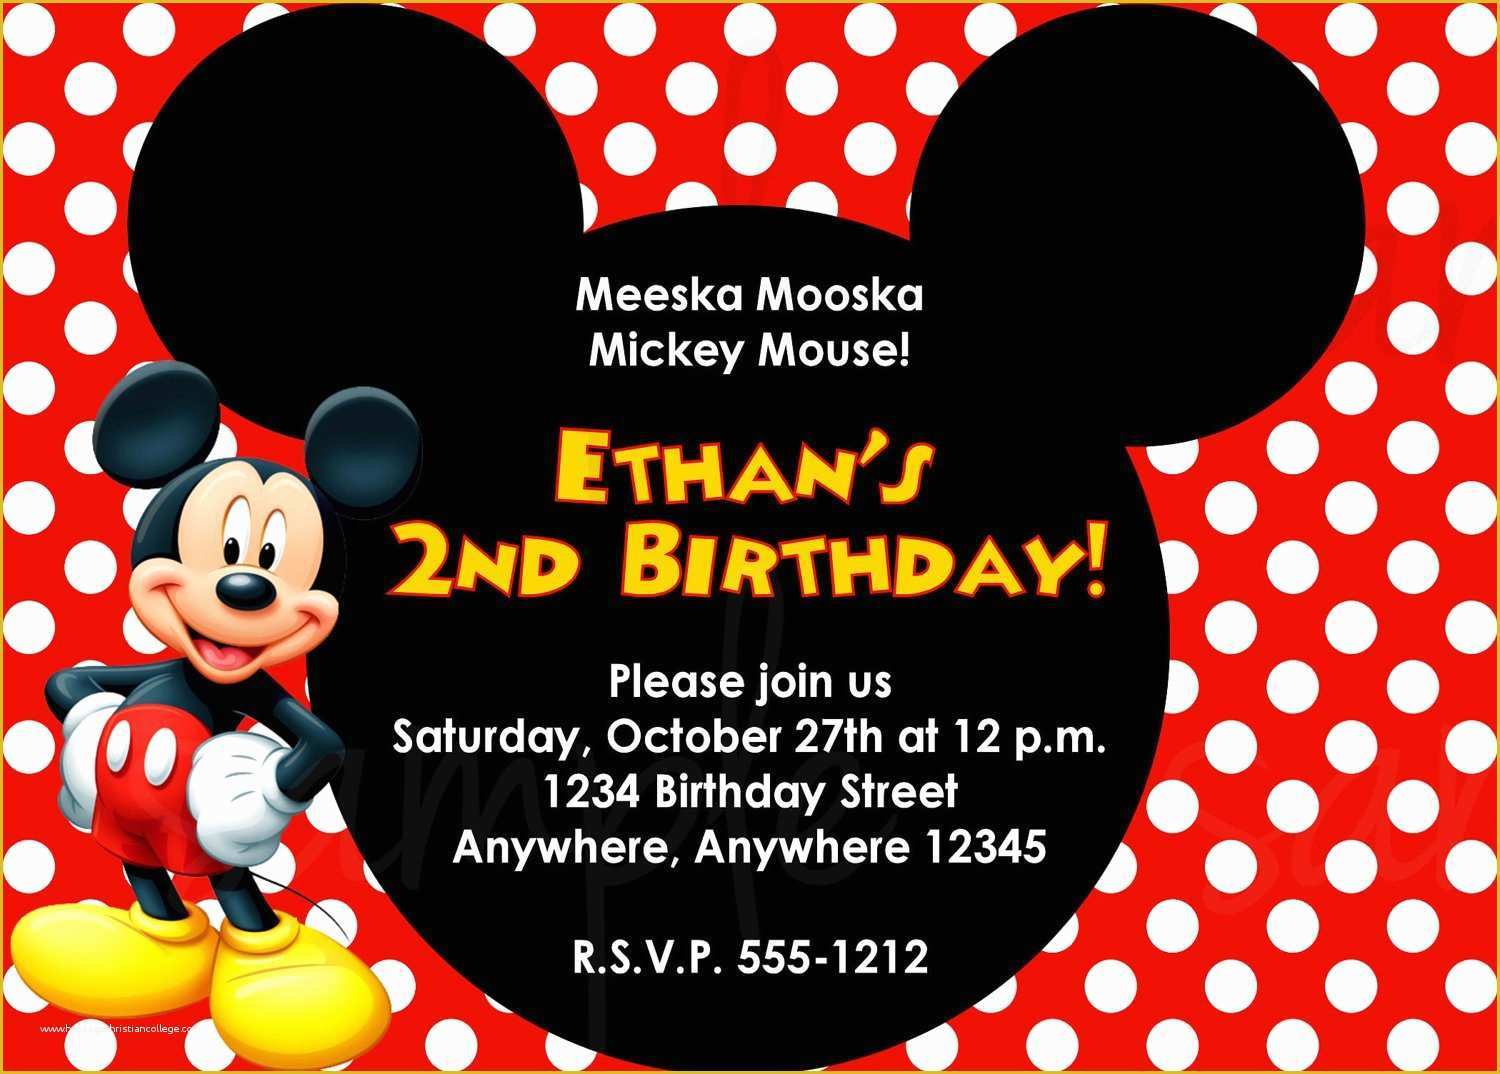 2nd Birthday Invitations Templates Free Of Mickey Mouse Birthday Invitation